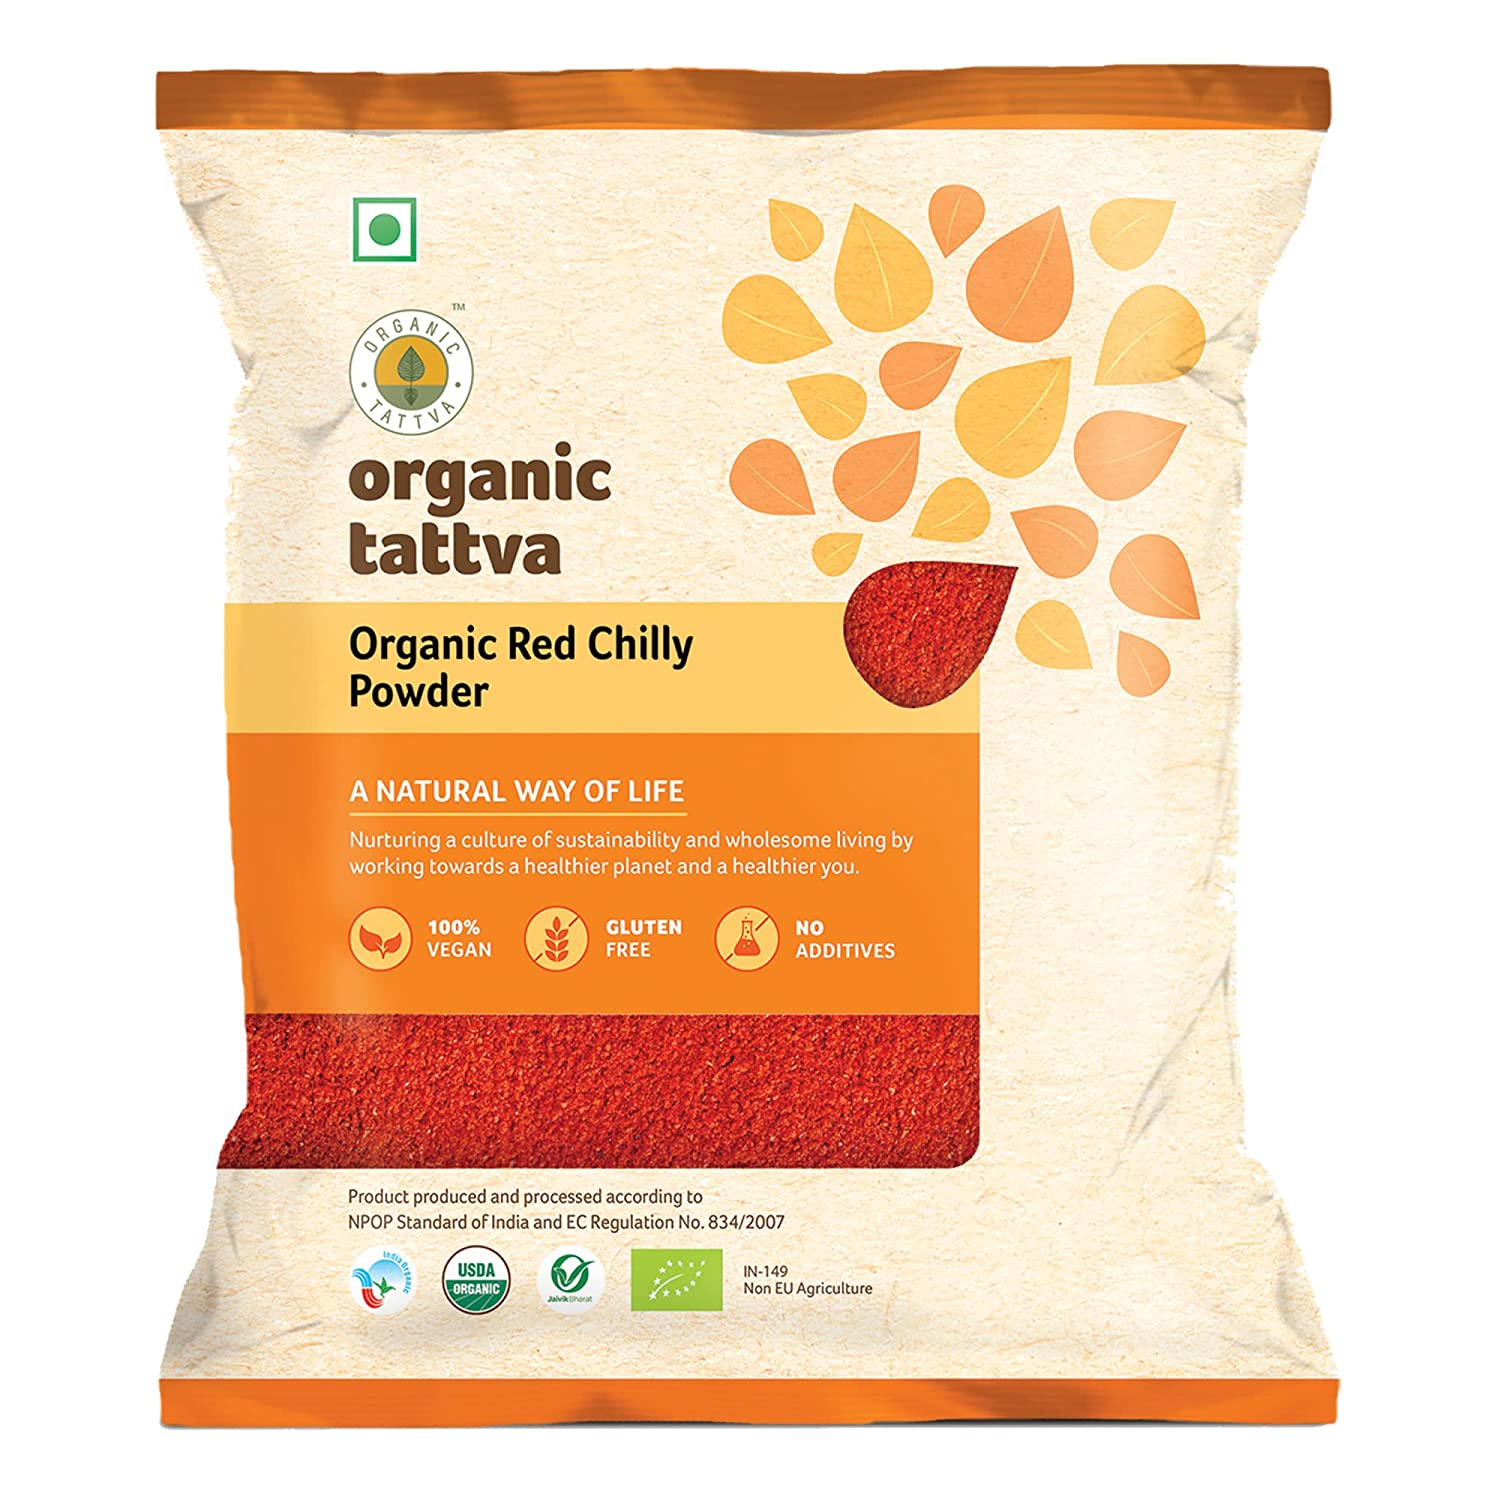 ORGANIC TATTAVA Organic Red Chilly Powder, 200g - Organic, Vegan, Gluten Free